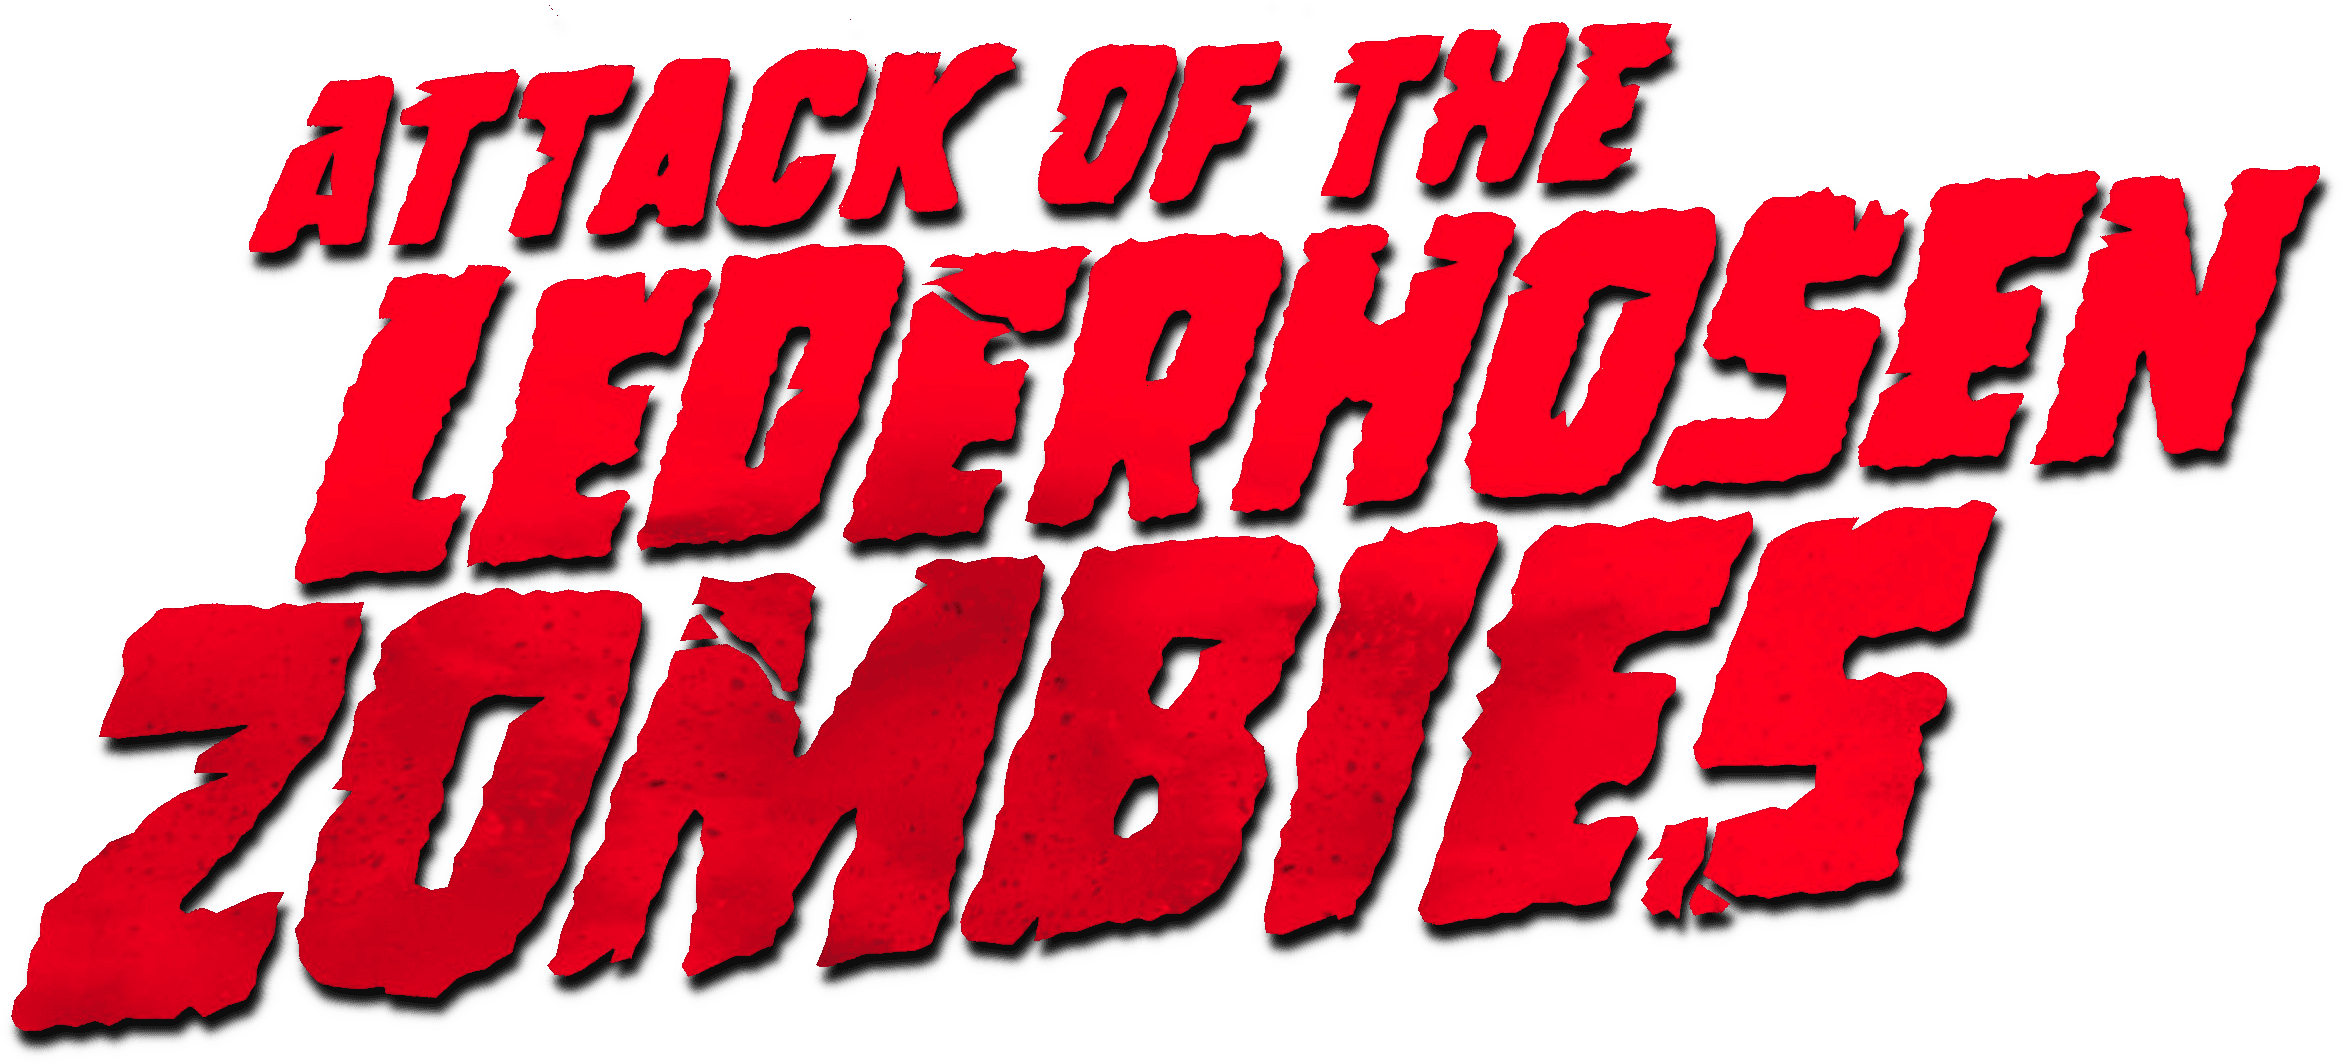 Attack of the Lederhosen Zombies logo